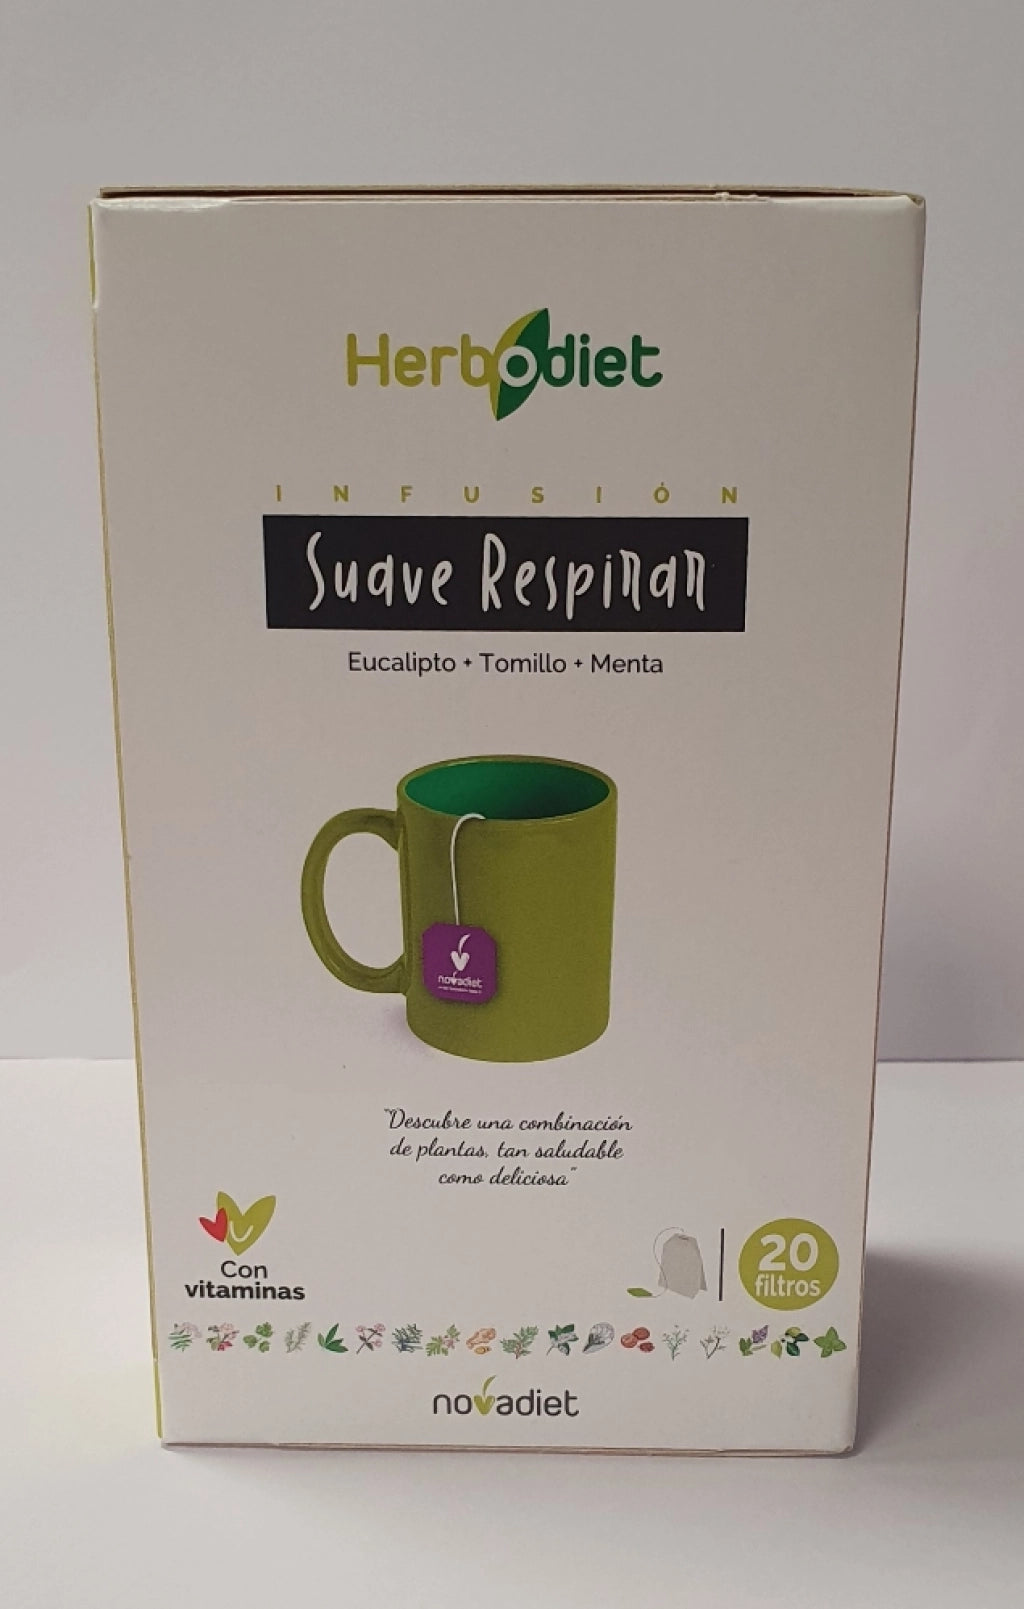 Novadiet-Herbodiet Suave Respirar -Novadiet- 20 bags - MazenOnline